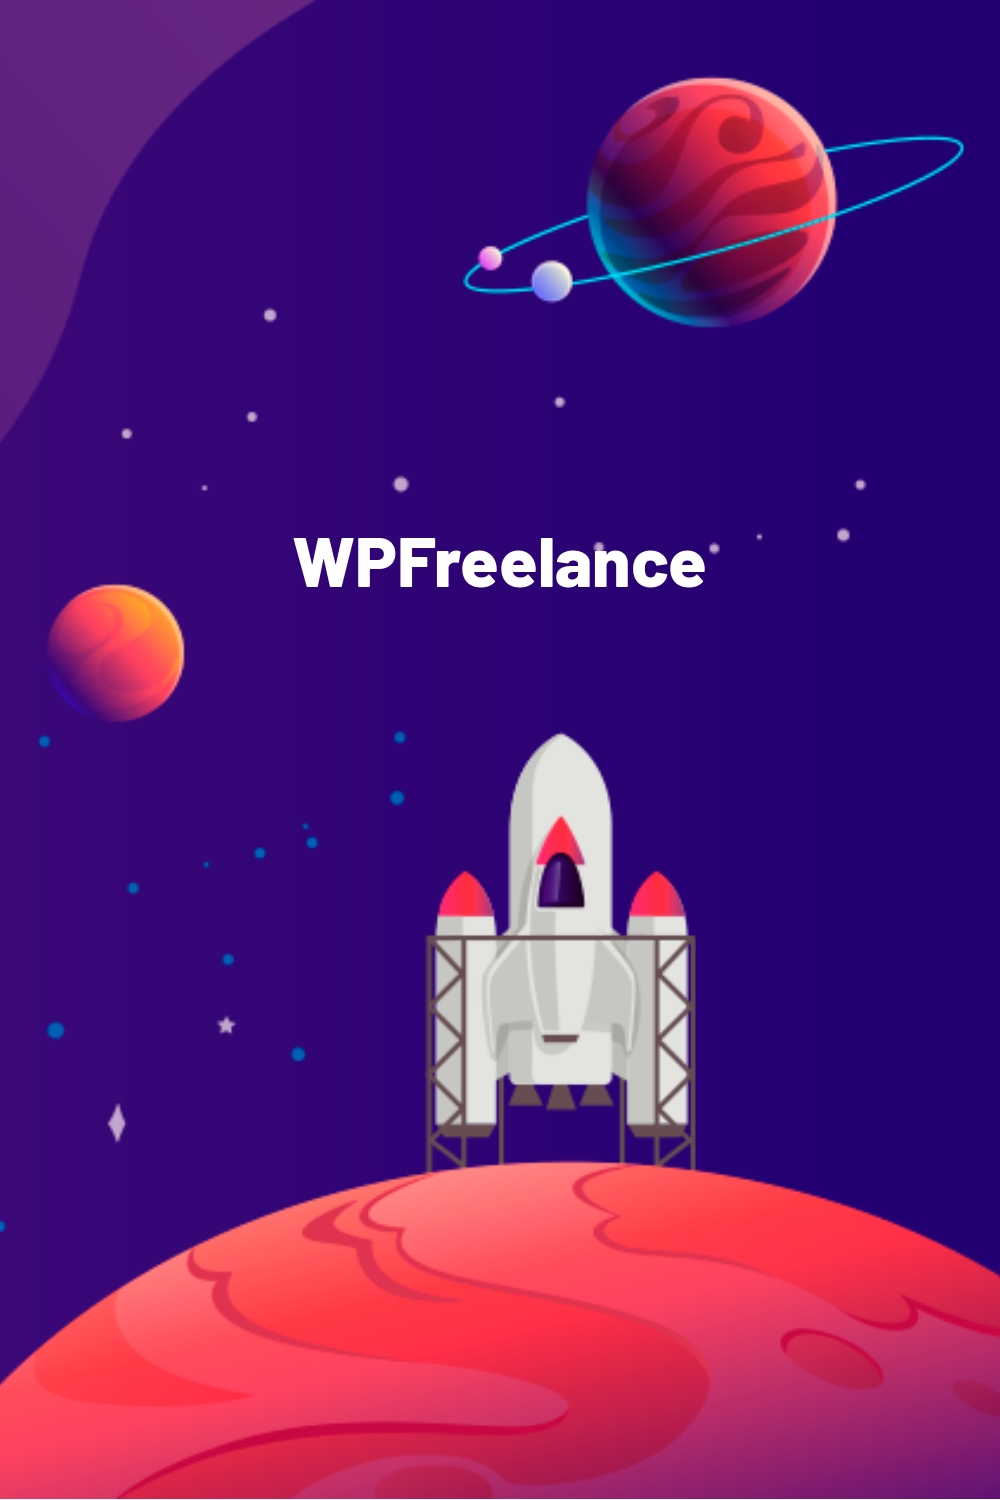 WPFreelance